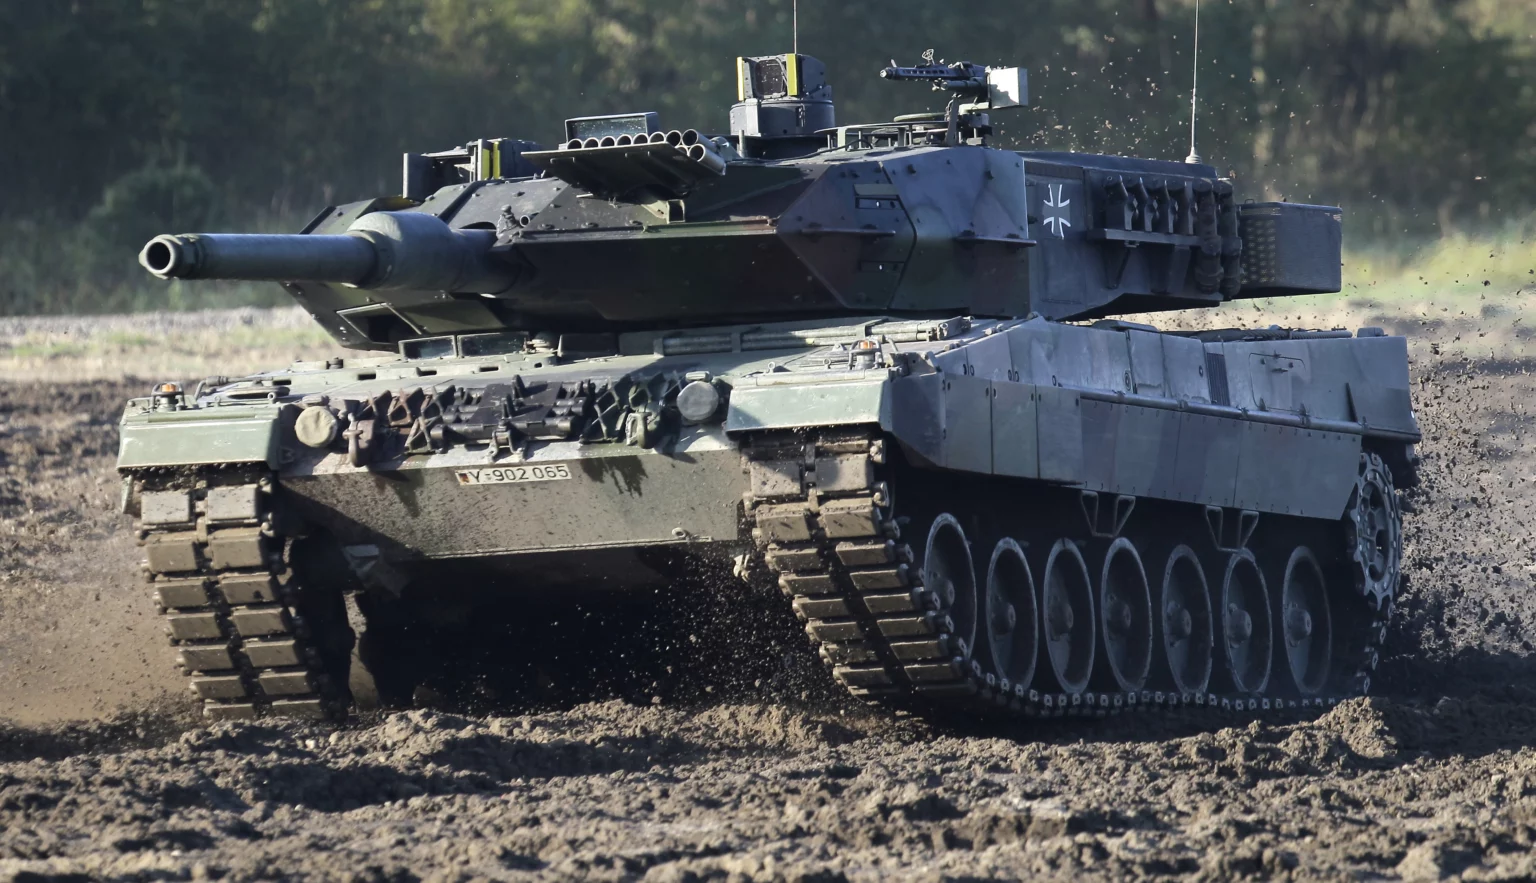 german-made-leopard-2-tanks-inefficient-on-ukraine-battlefield-russian-installed-adviser